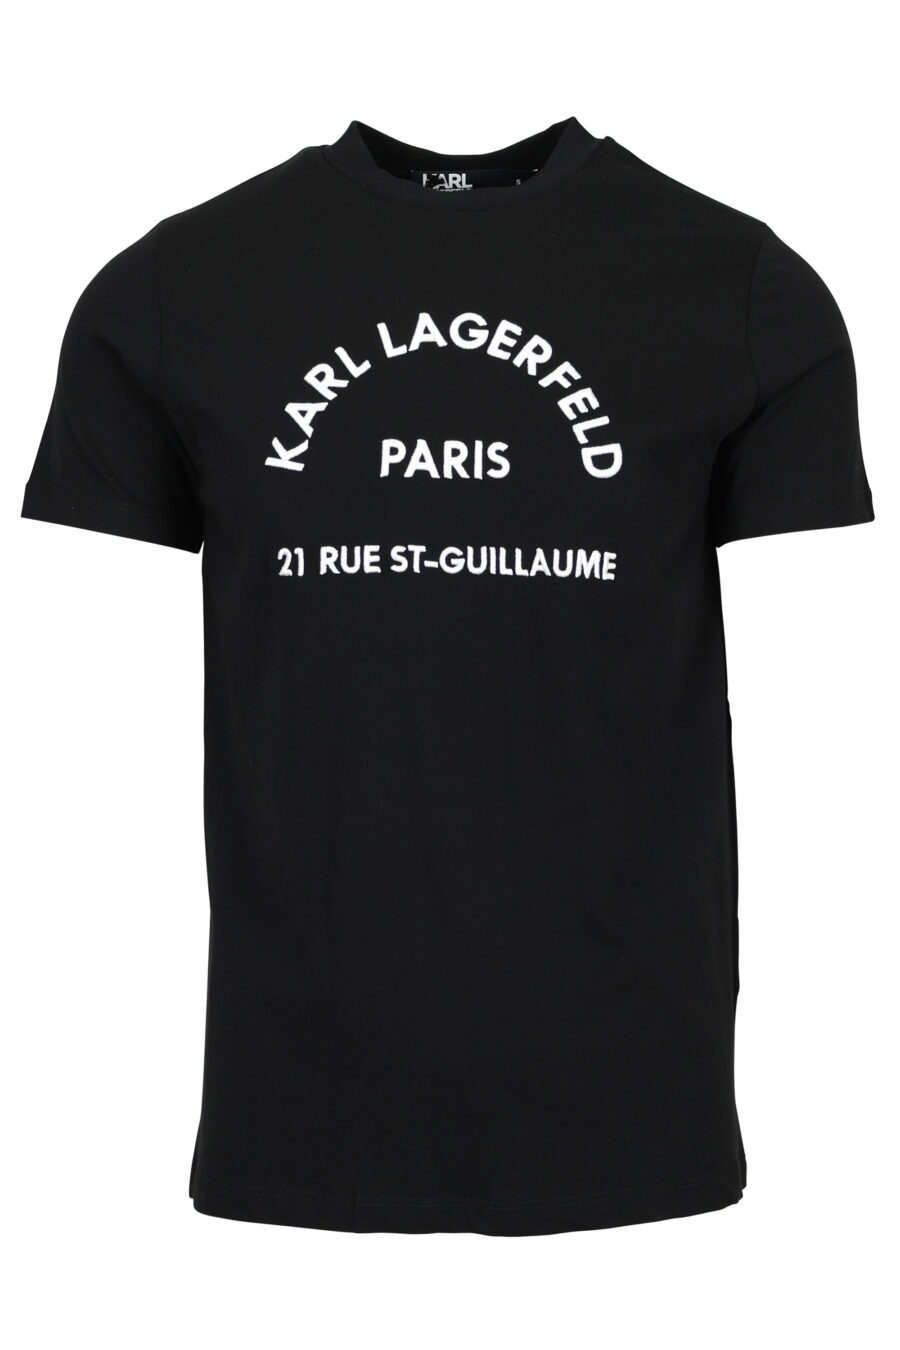 Camiseta negra con maxilogo "rue st guillaume" en relieve - 4062226963701